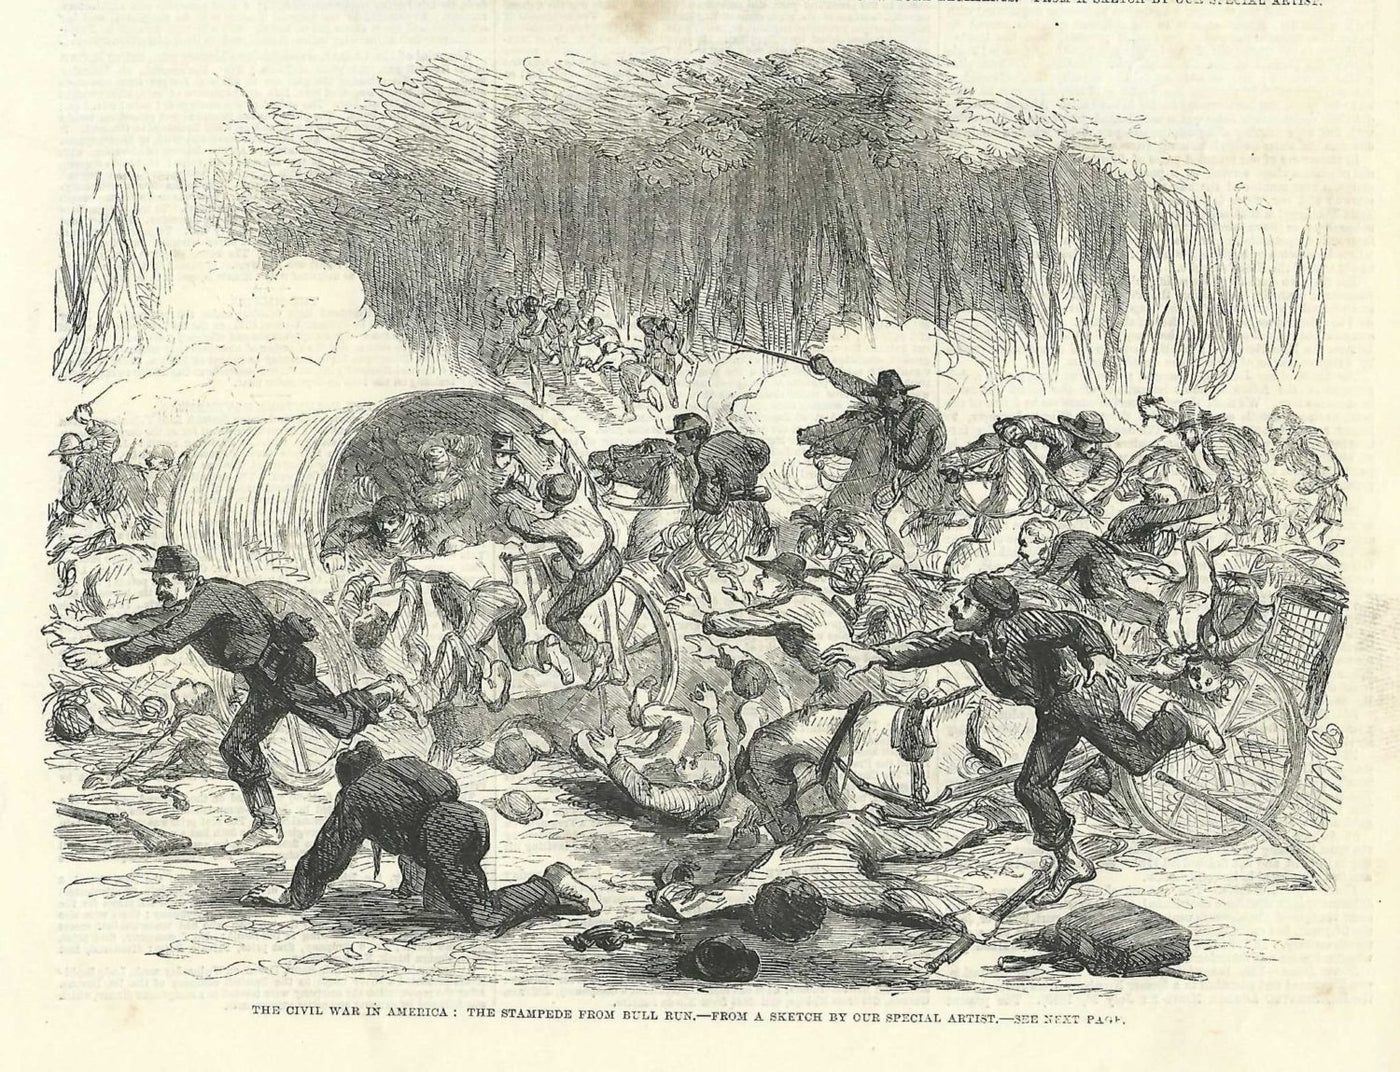 Bull Run retreat of Union Army at Manassas Prince William County Virginia 1861